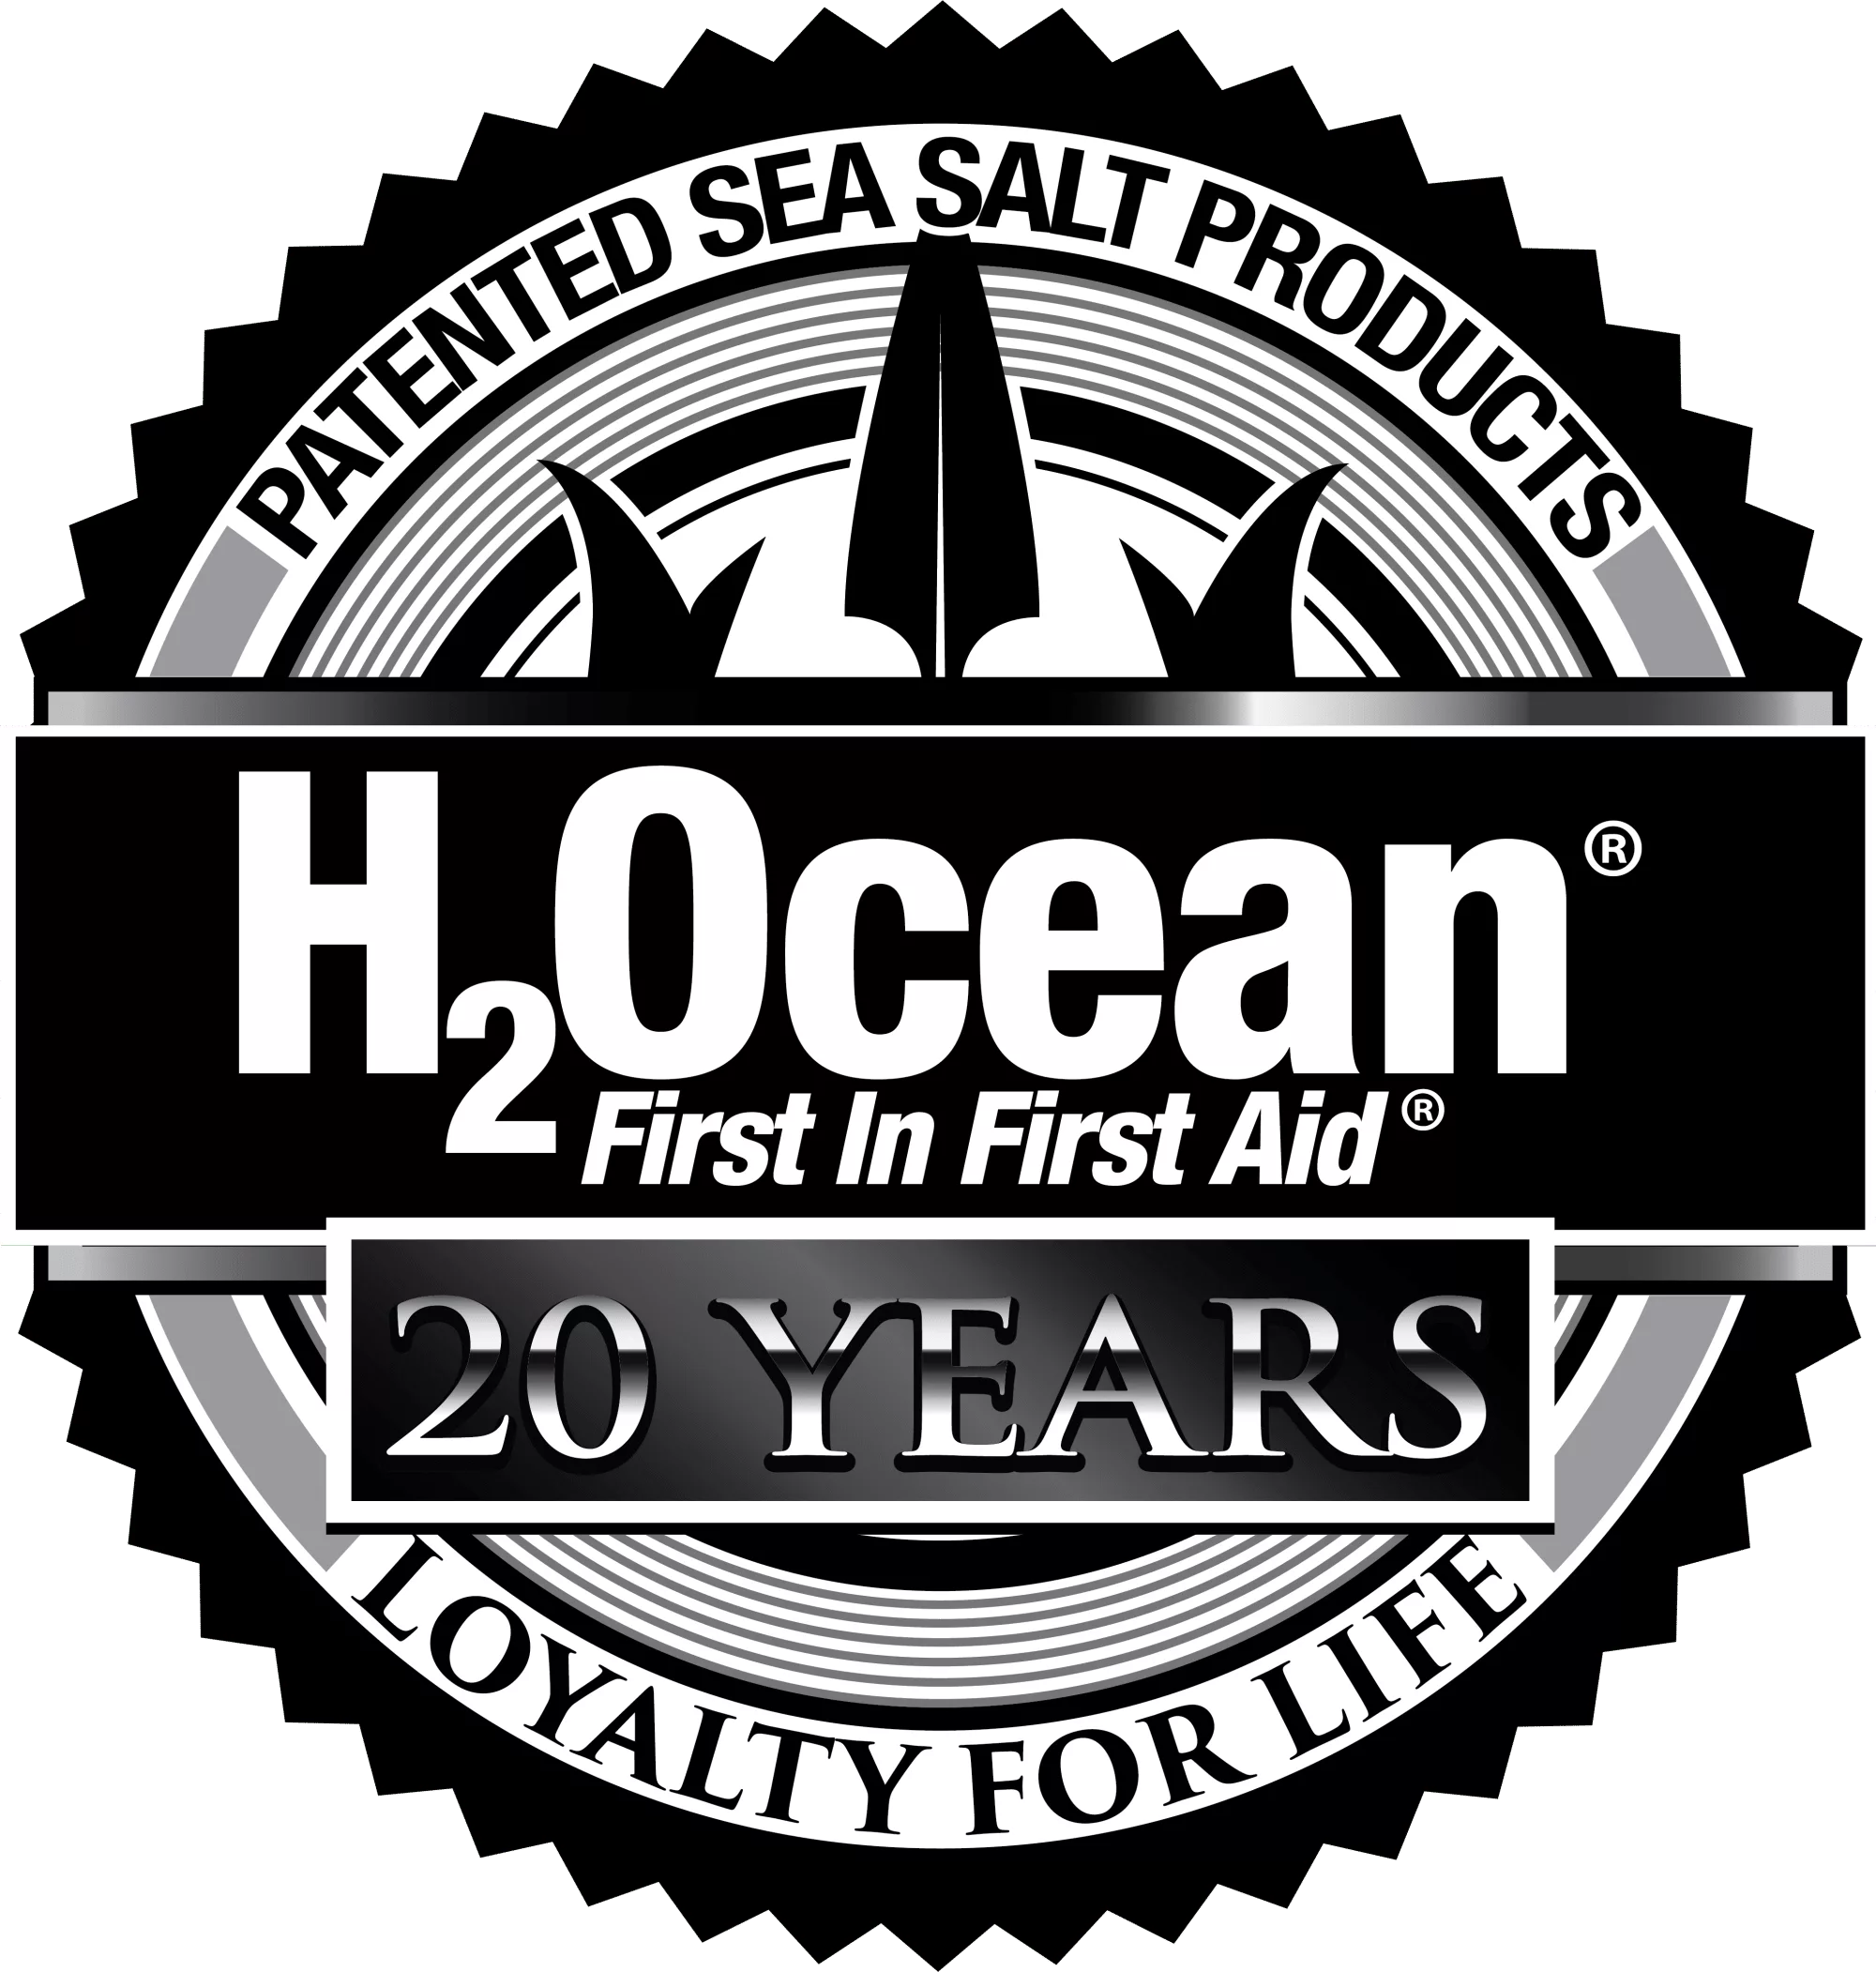 H2Ocean Loyalty for Life!